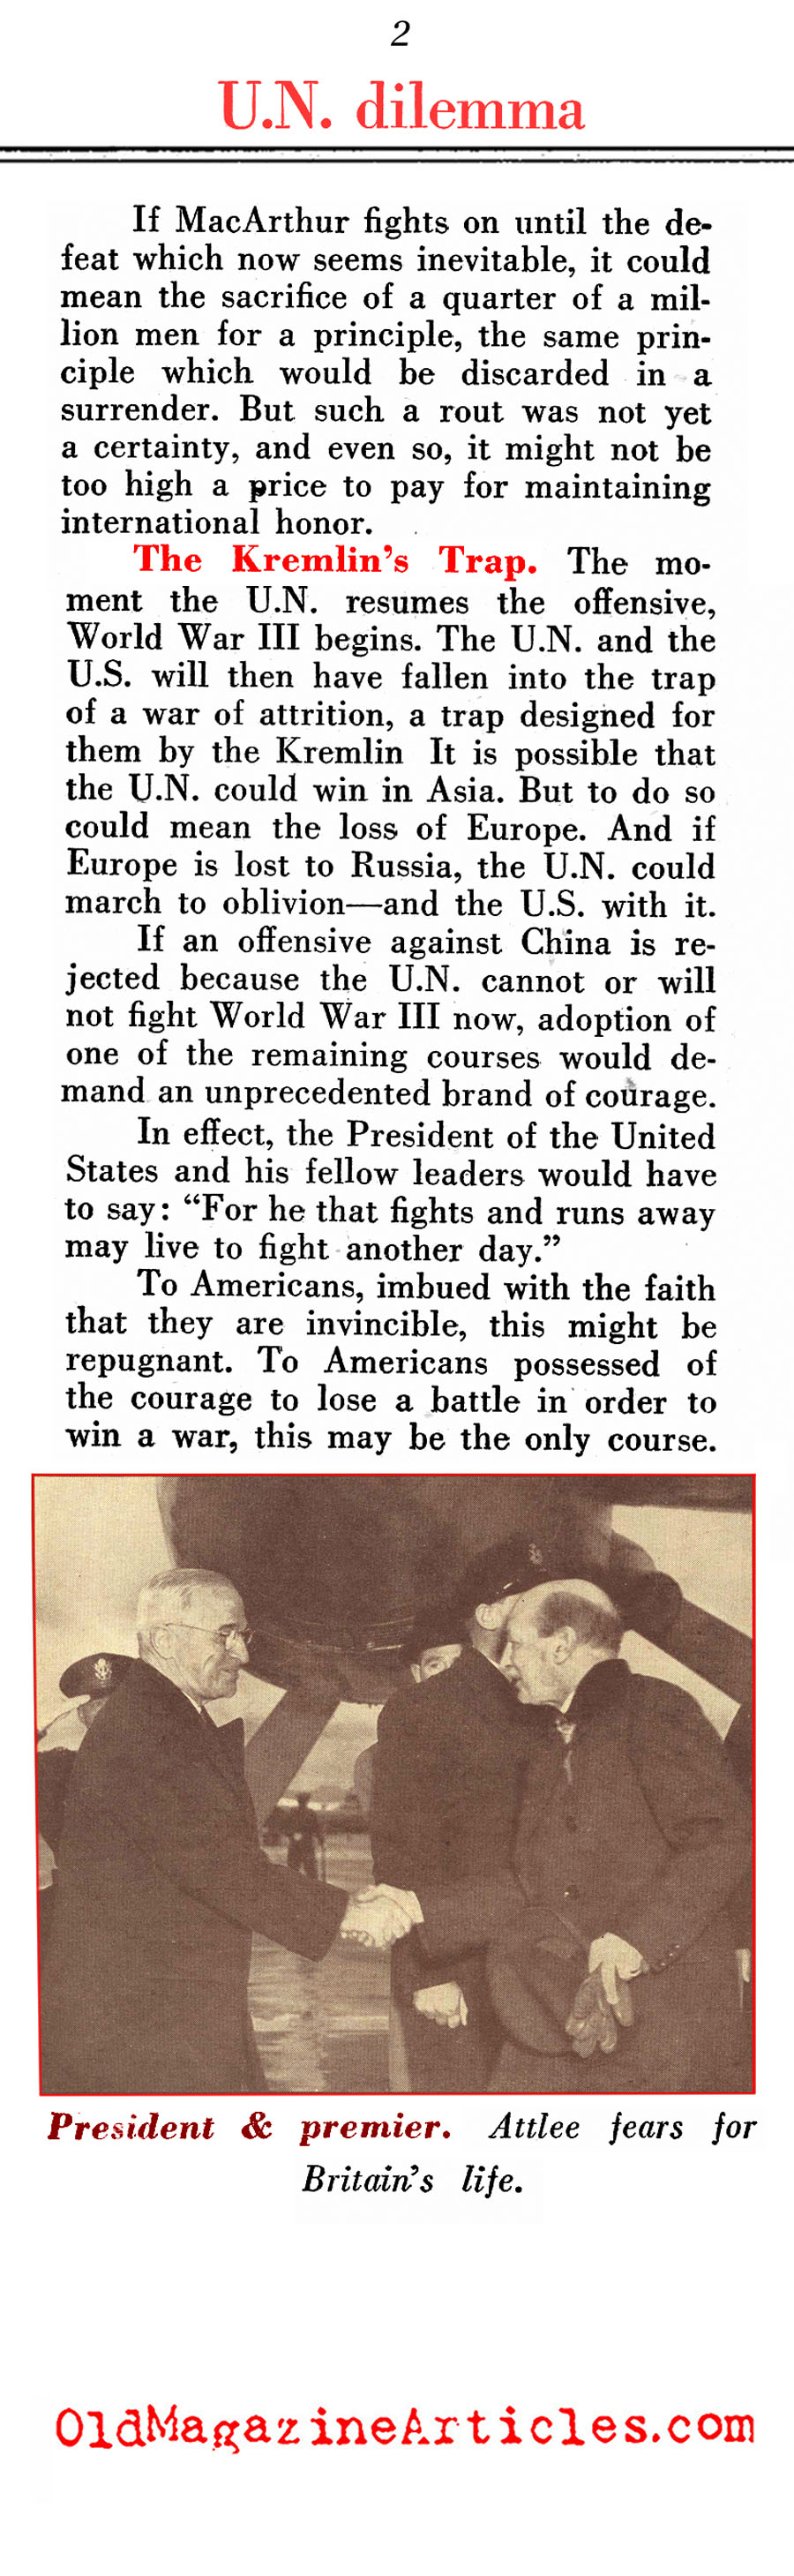 U.N. Dilemma (Pathfinder Magazine, 1950)